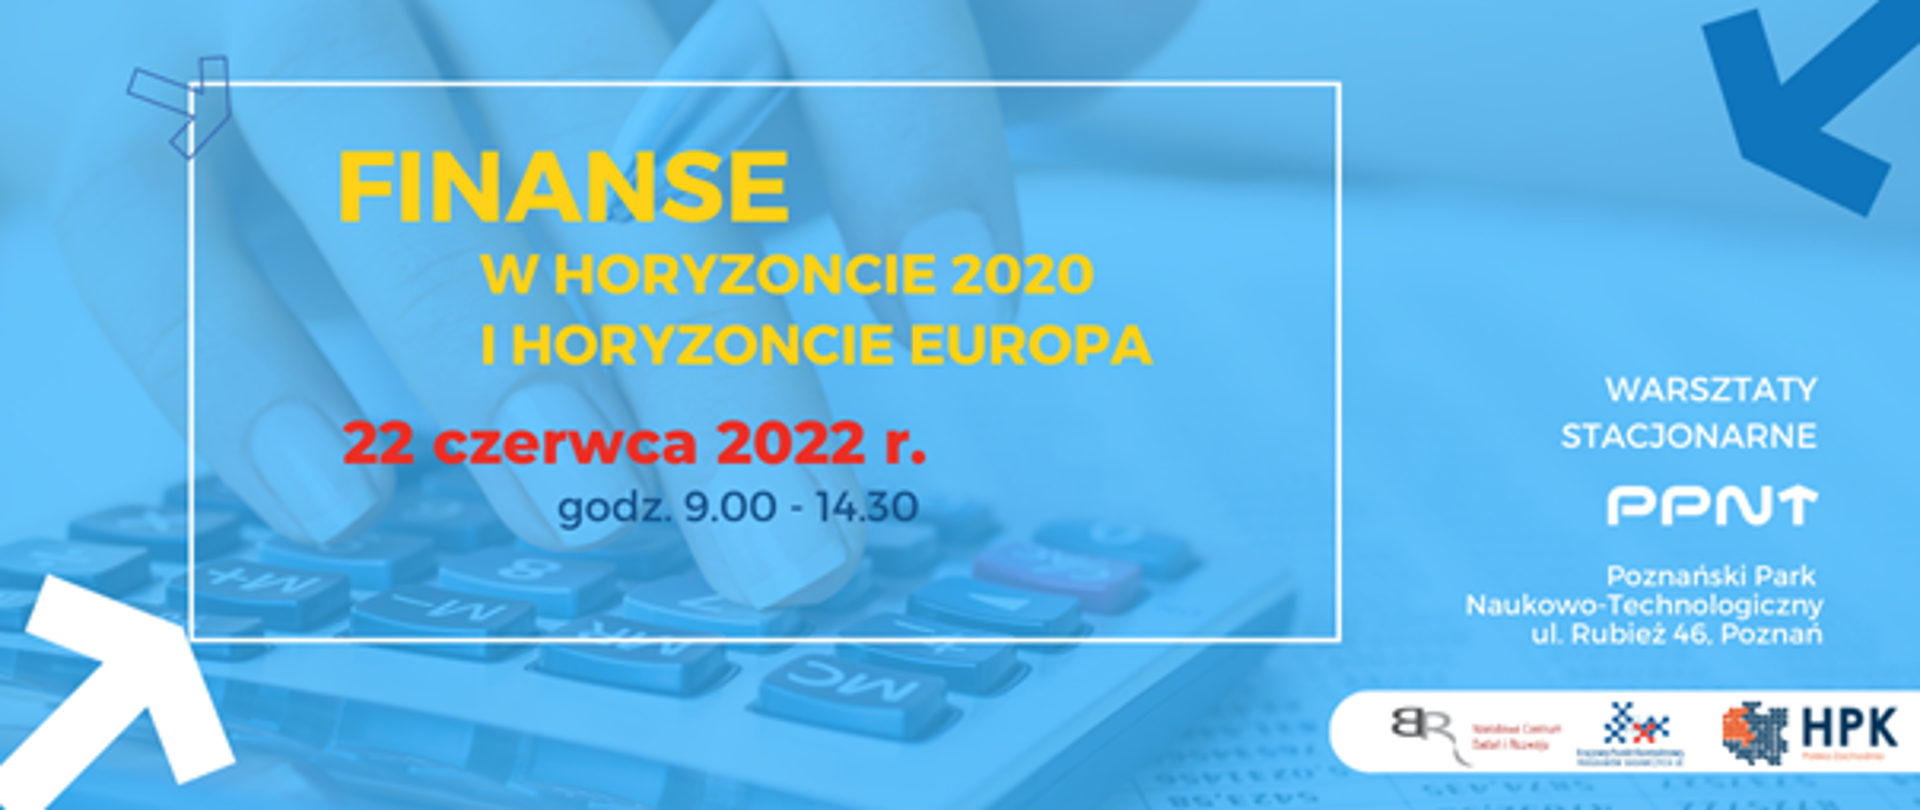 FINANSE W HORYZONCIE 2020 I HORYZONCIE EUROPA